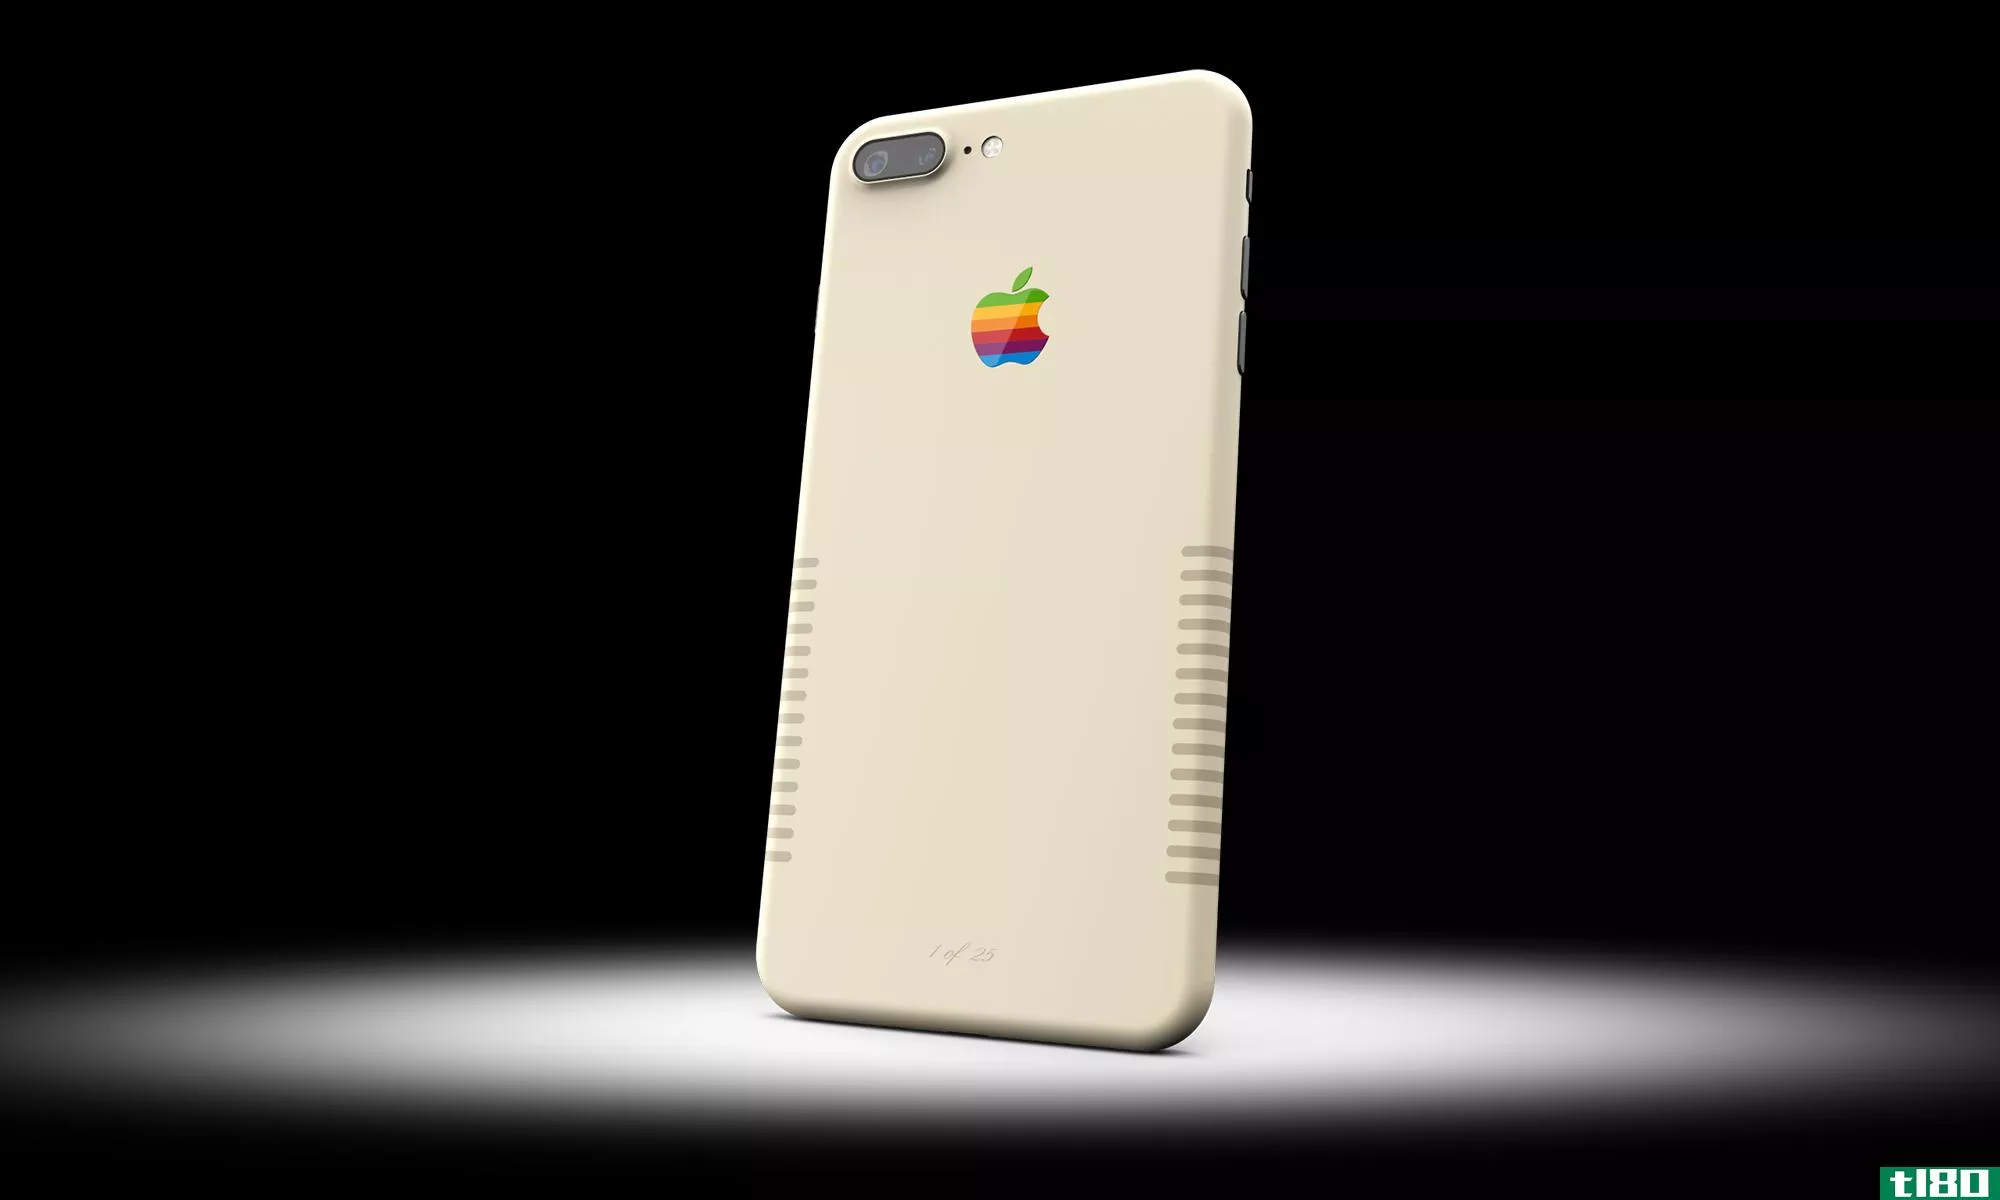 colorware复古风格的iPhone7 plus既漂亮又昂贵